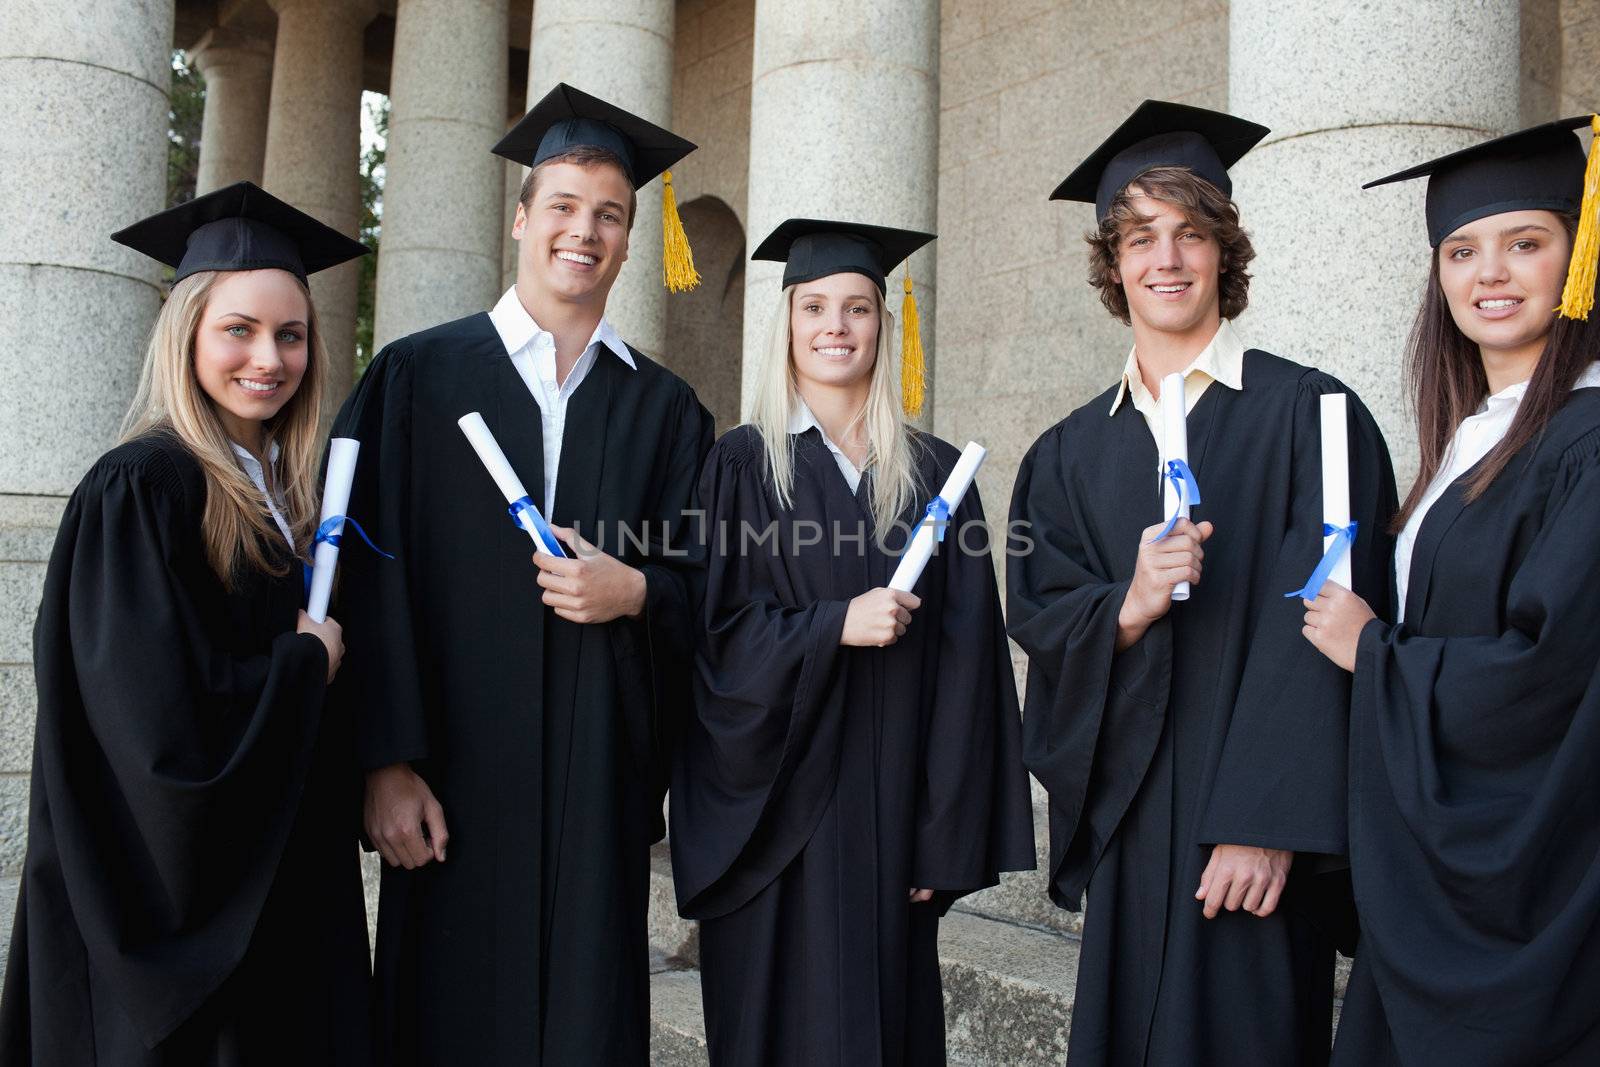 Graduates together by Wavebreakmedia